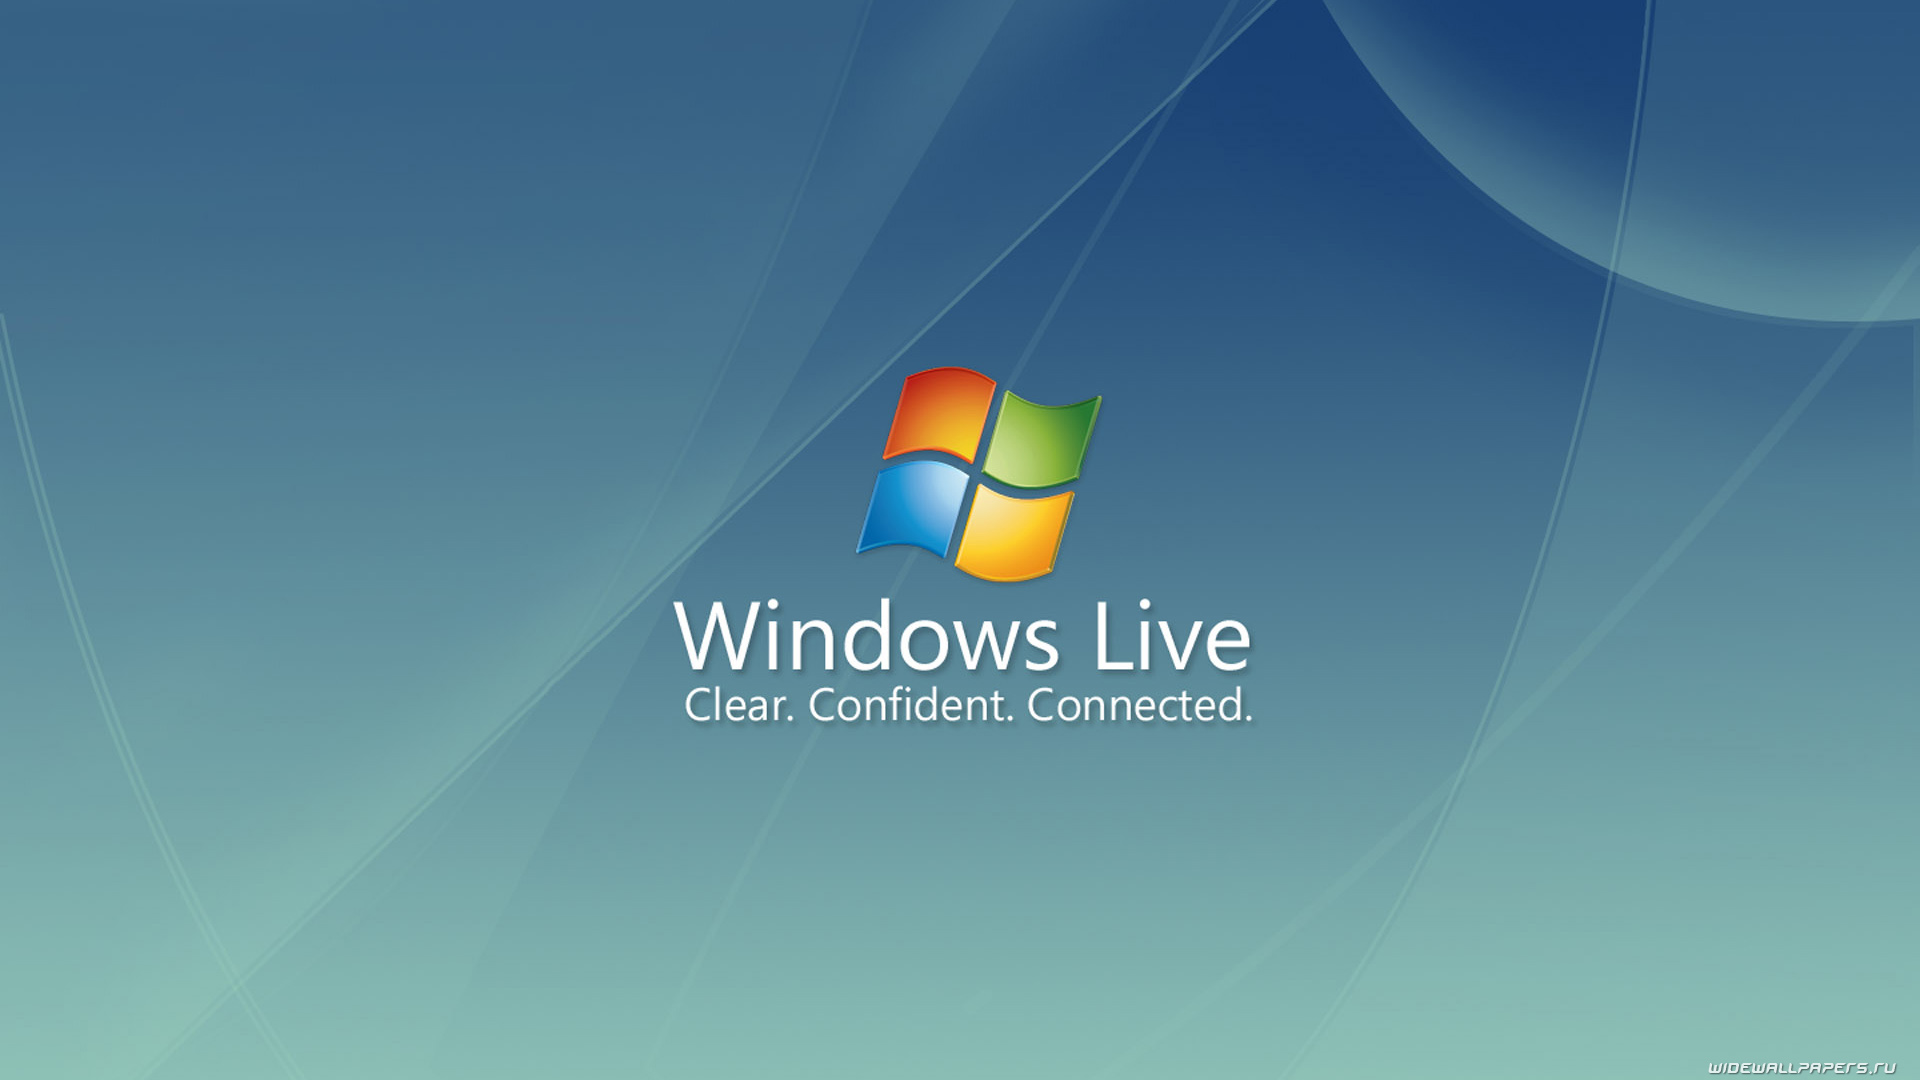 Windows Live Wallpaper HD Of